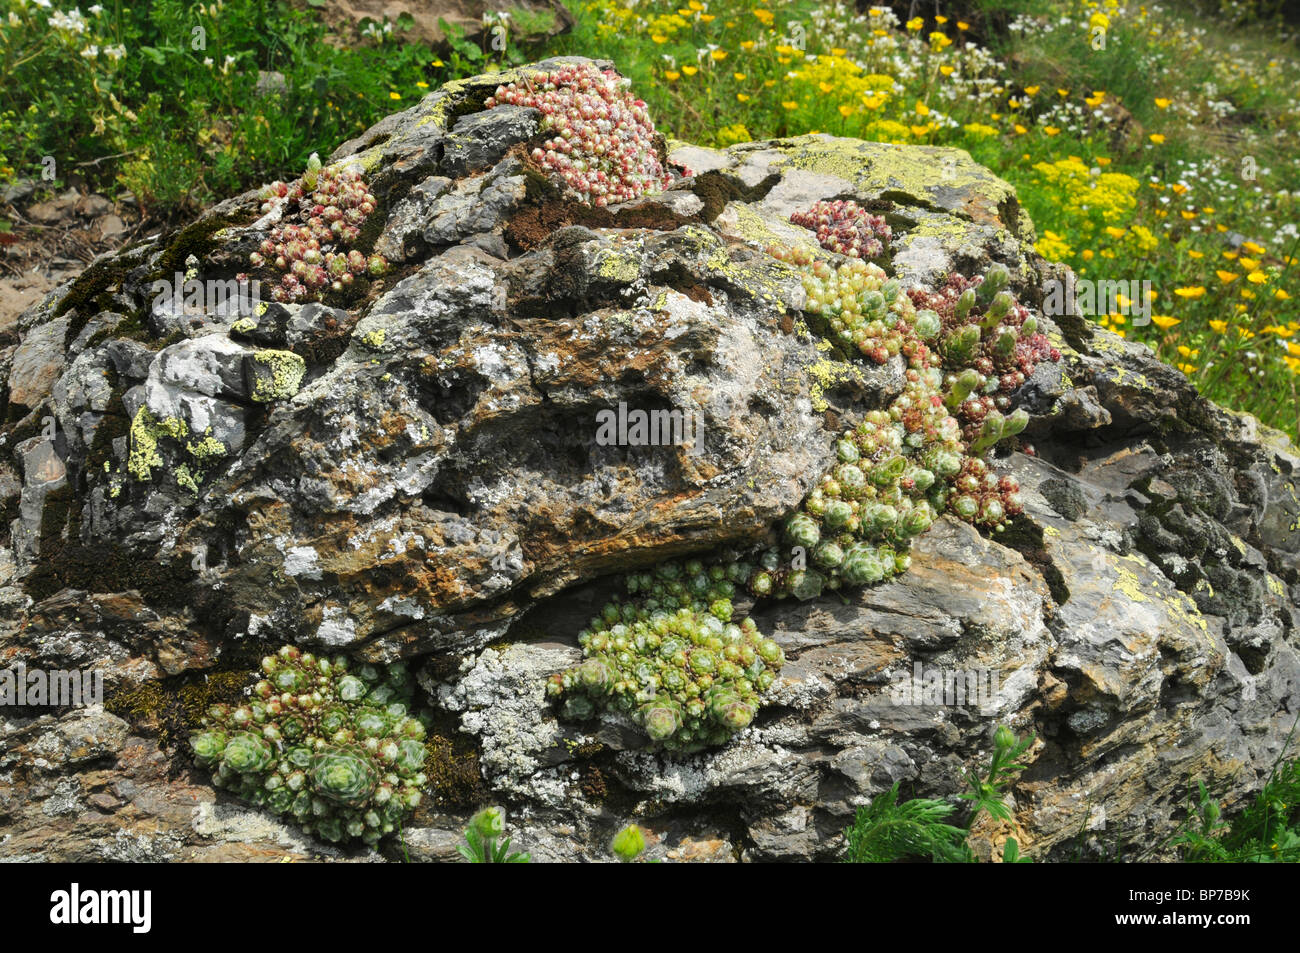 Cobweb House Leek, Cobweb houseleek (Sempervivum arachnoideum), growing on rock, Spain, Pyrenaeen, Katalonien Stock Photo